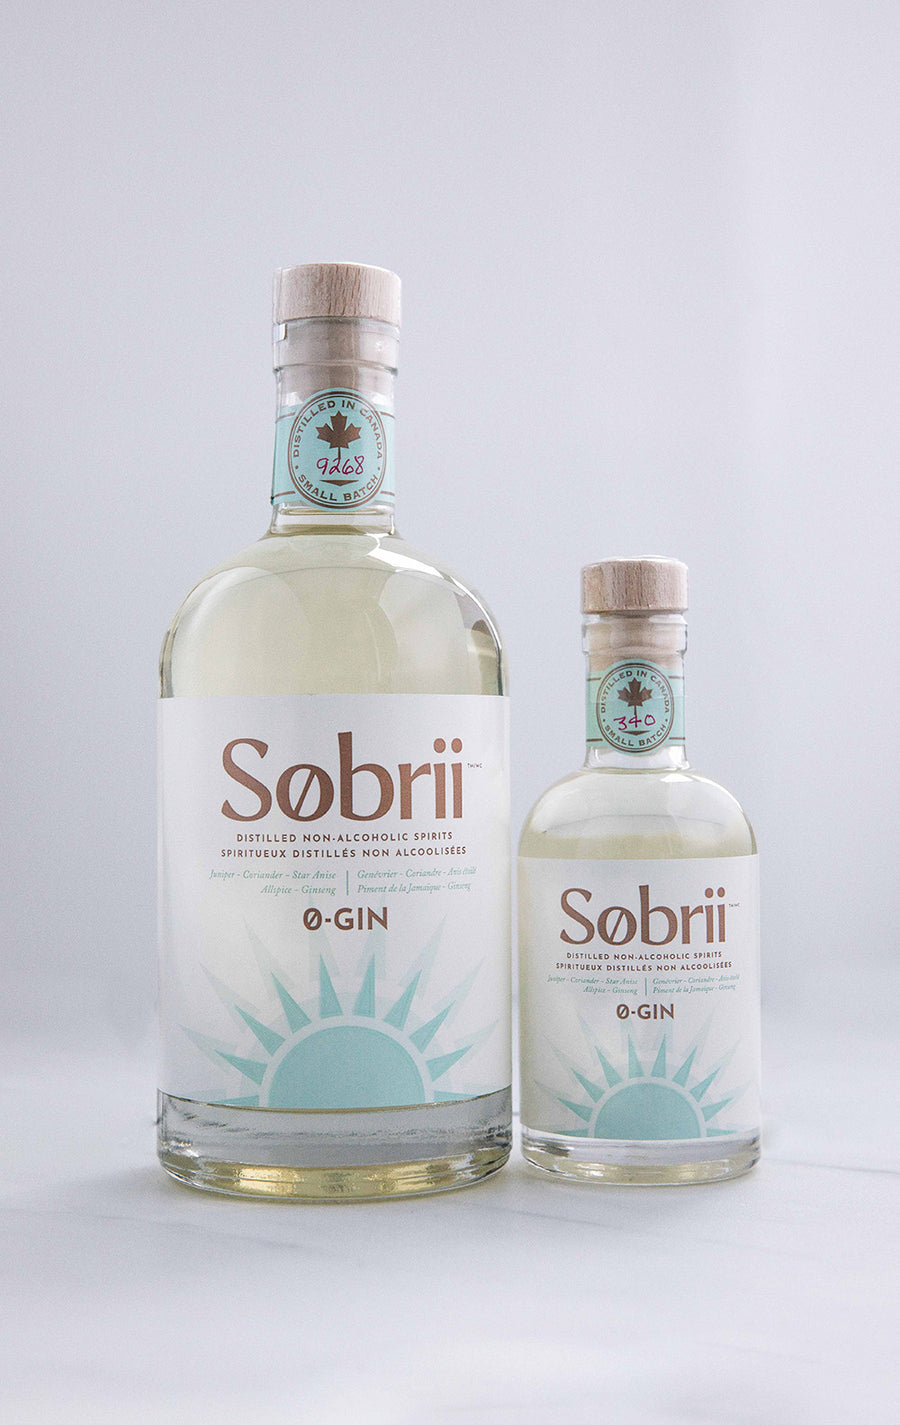 Sobrii 0-Gin 750ml and 200ml Bottles.